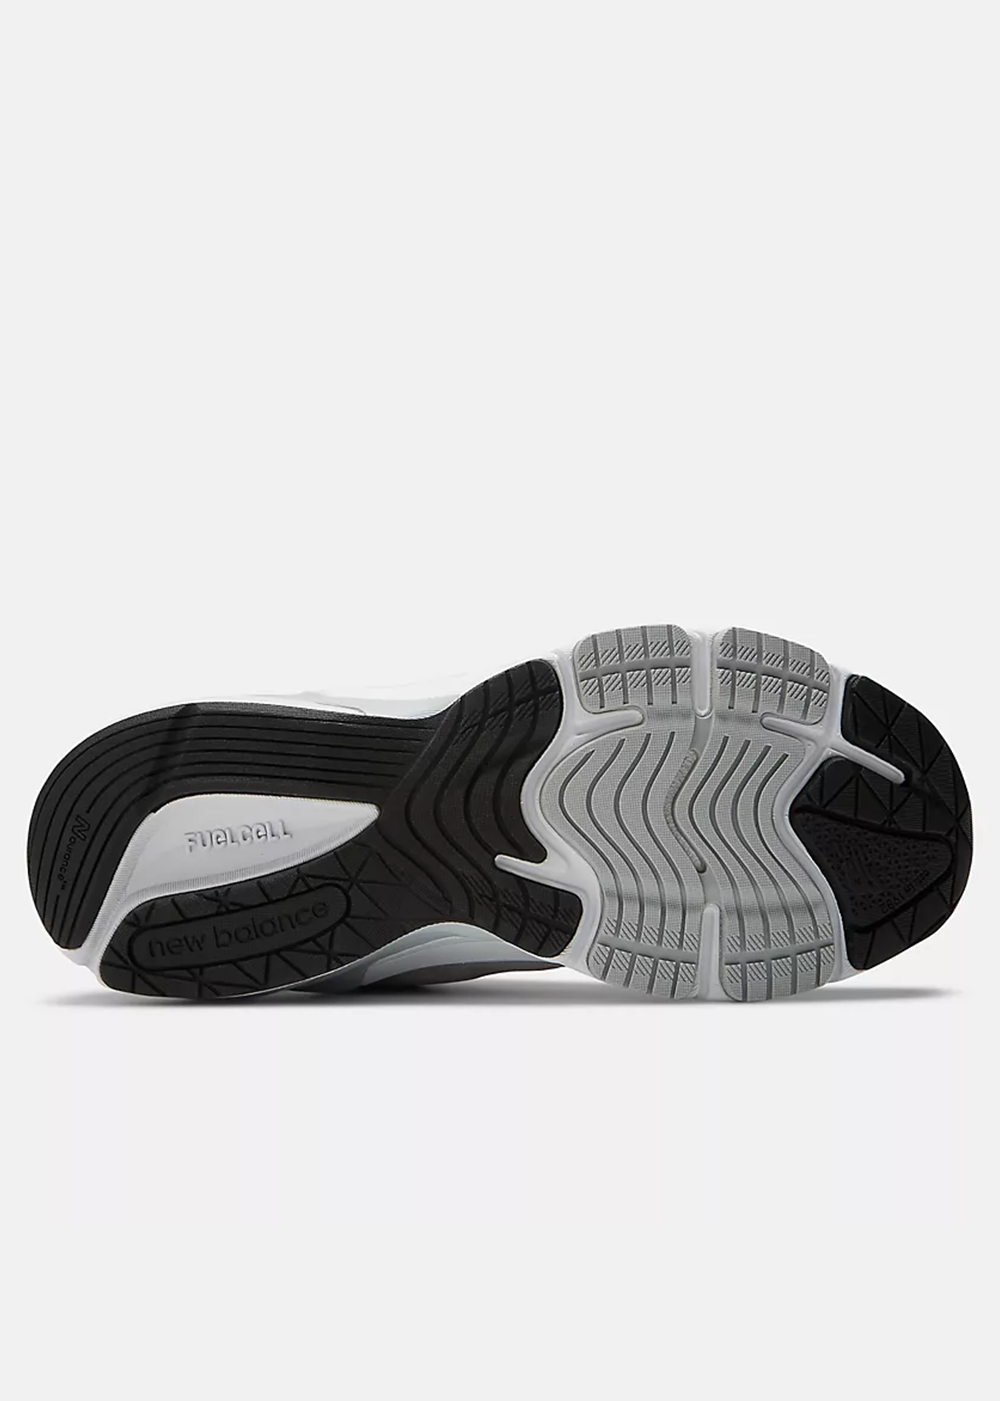 Women's 990V6 Sneakers - Grey - New Balance Canada - Danali